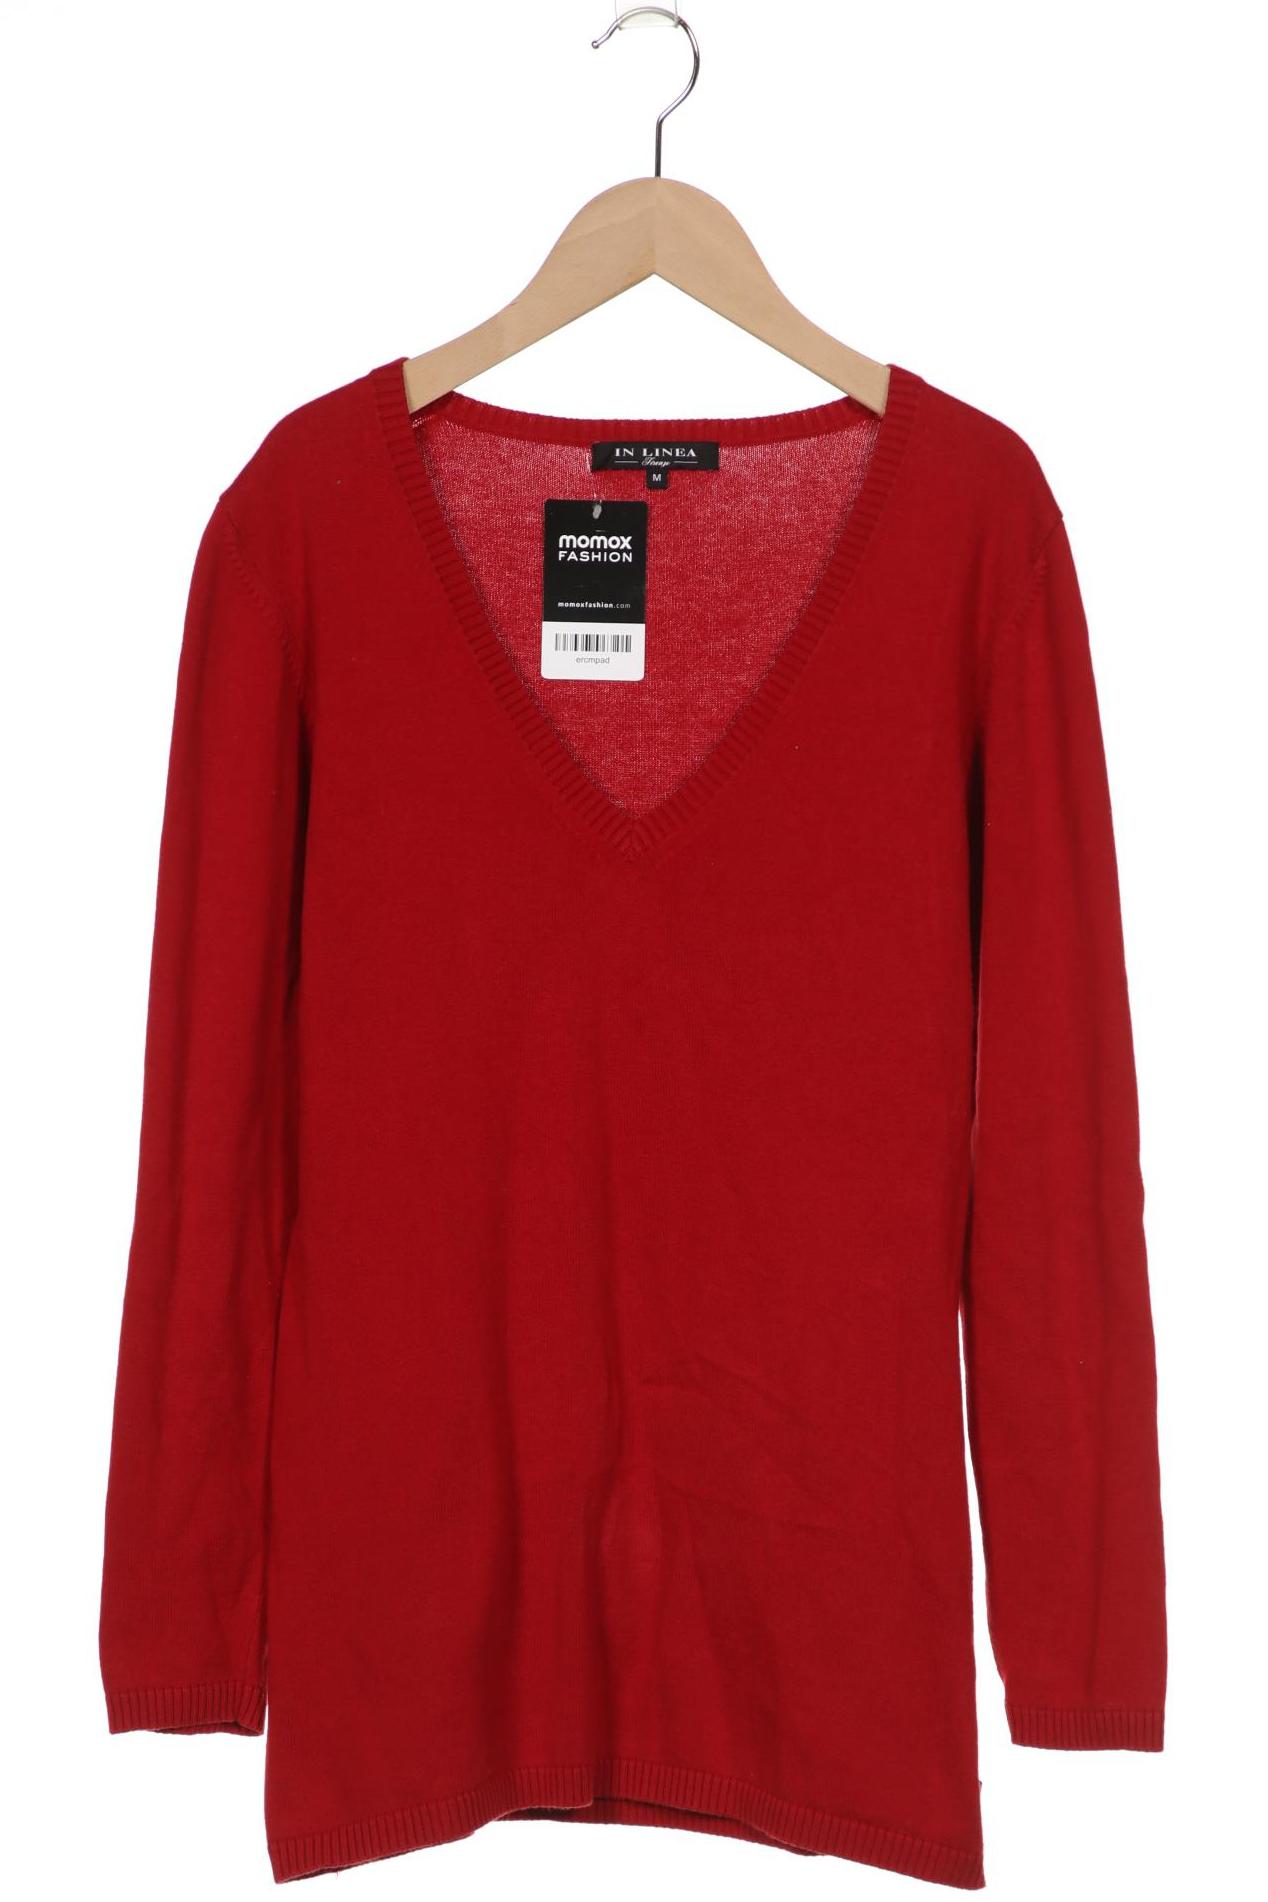 In Linea Damen Pullover, rot, Gr. 38 von In Linea